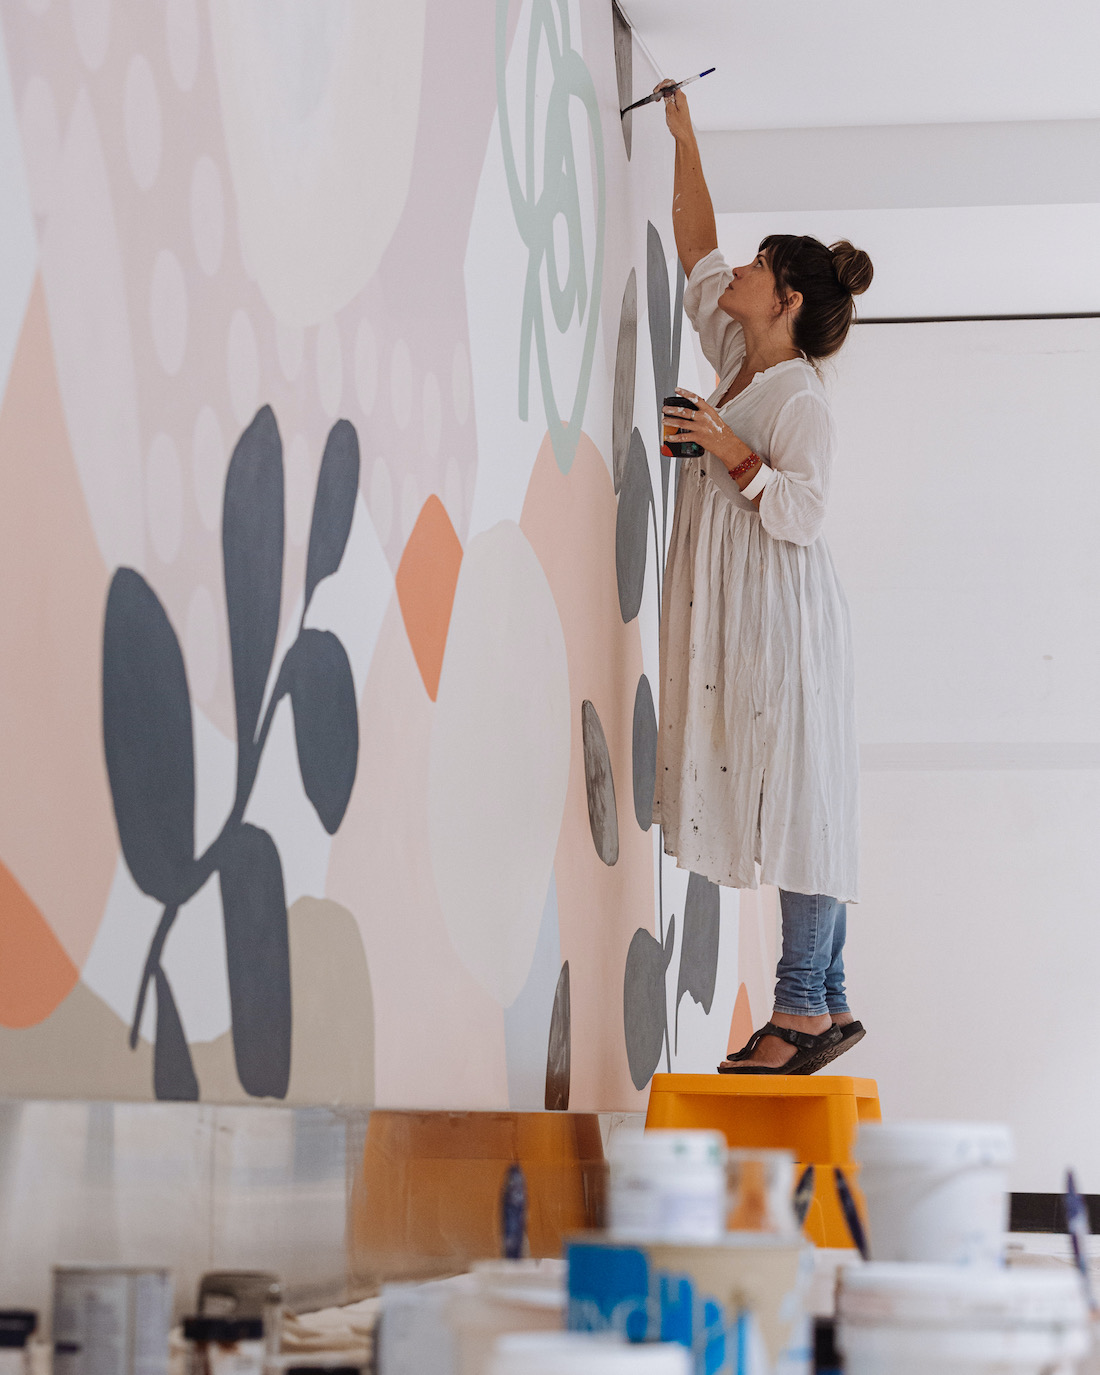 Kiasmin painting a mural